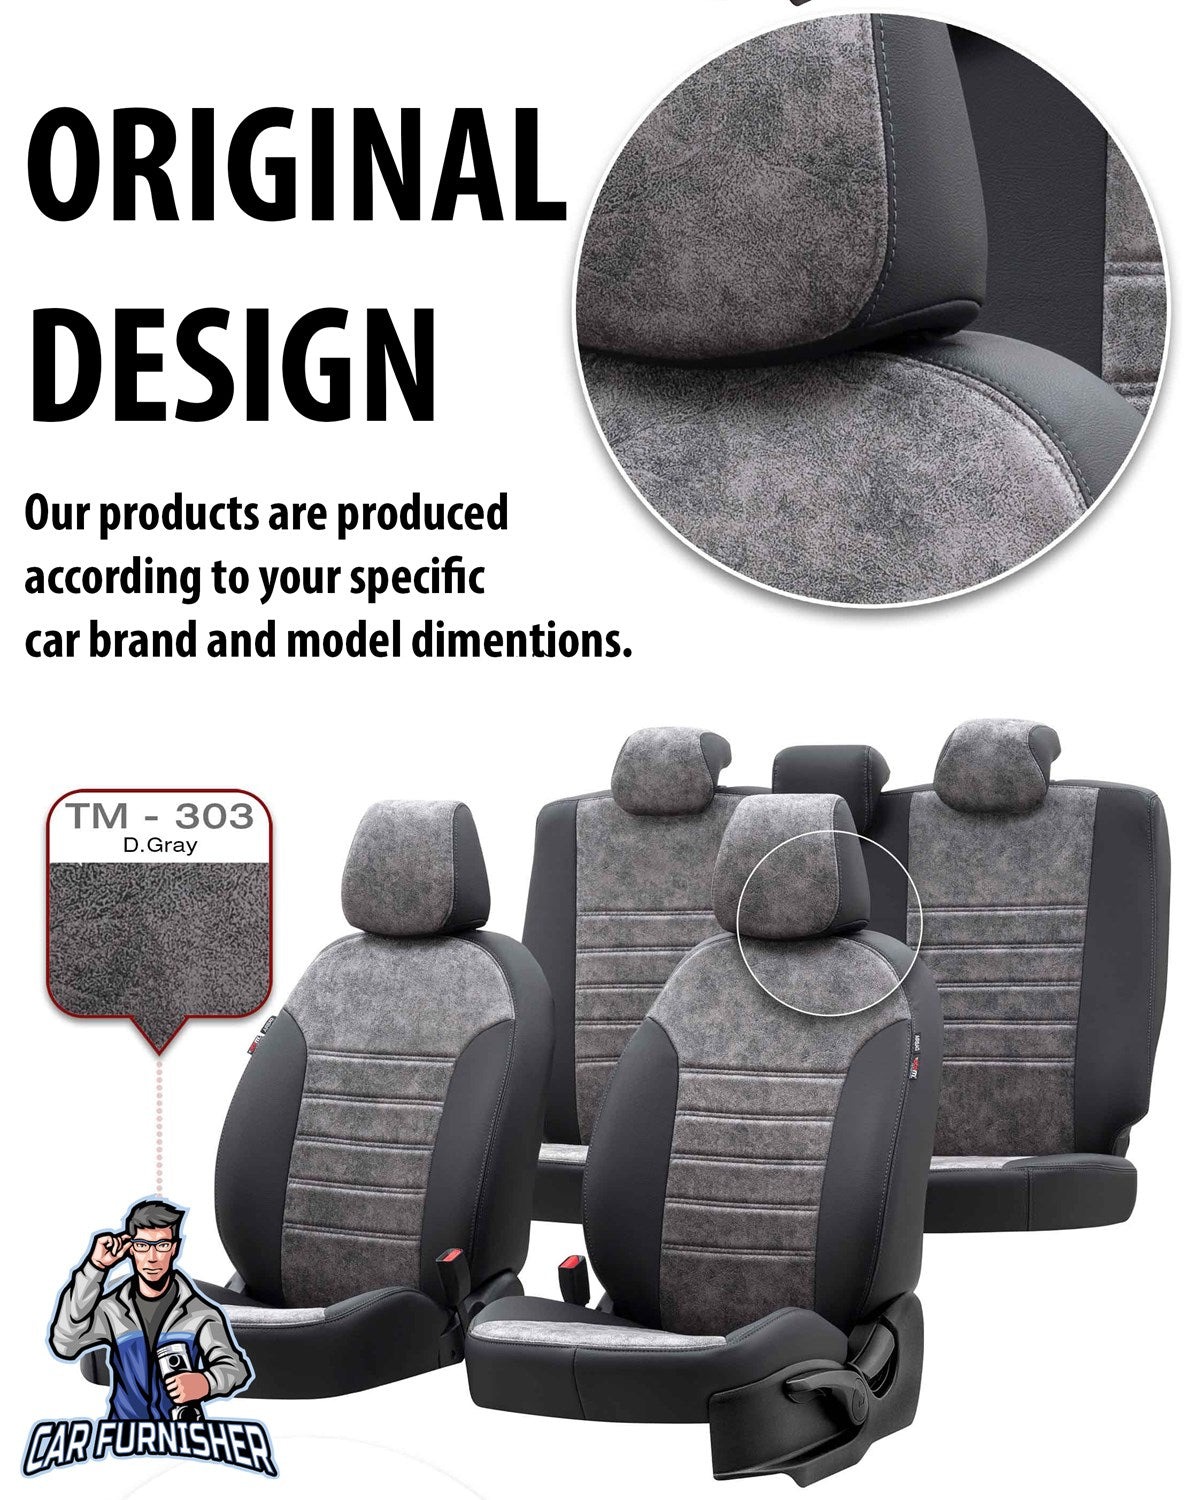 Audi Q7 Seat Cover Milano Suede Design Burgundy Leather & Suede Fabric